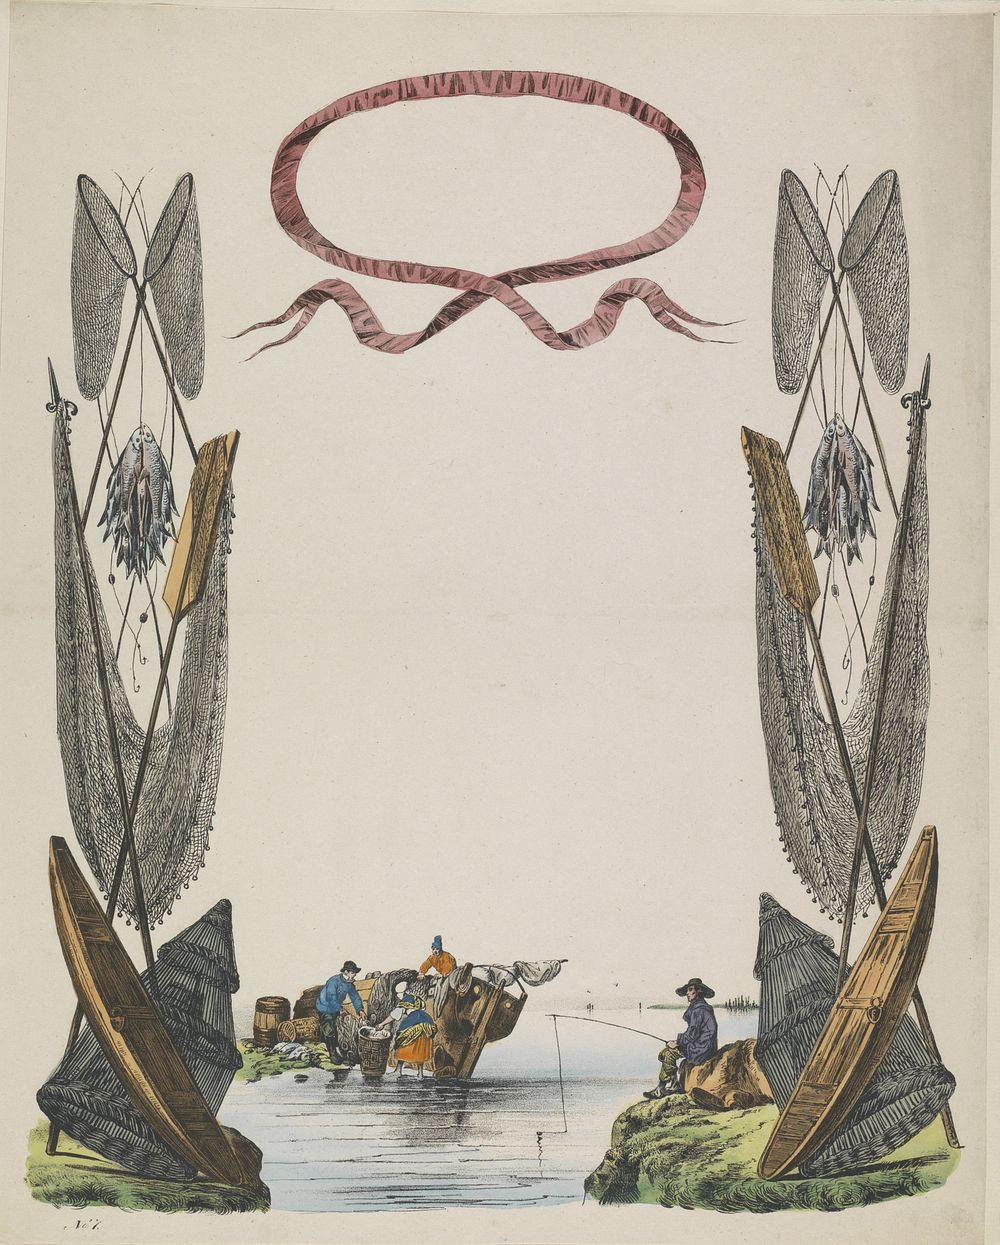 Wensbrief met vissers en visnetten (c. 1780 - c. 1899) by anonymous and anonymous